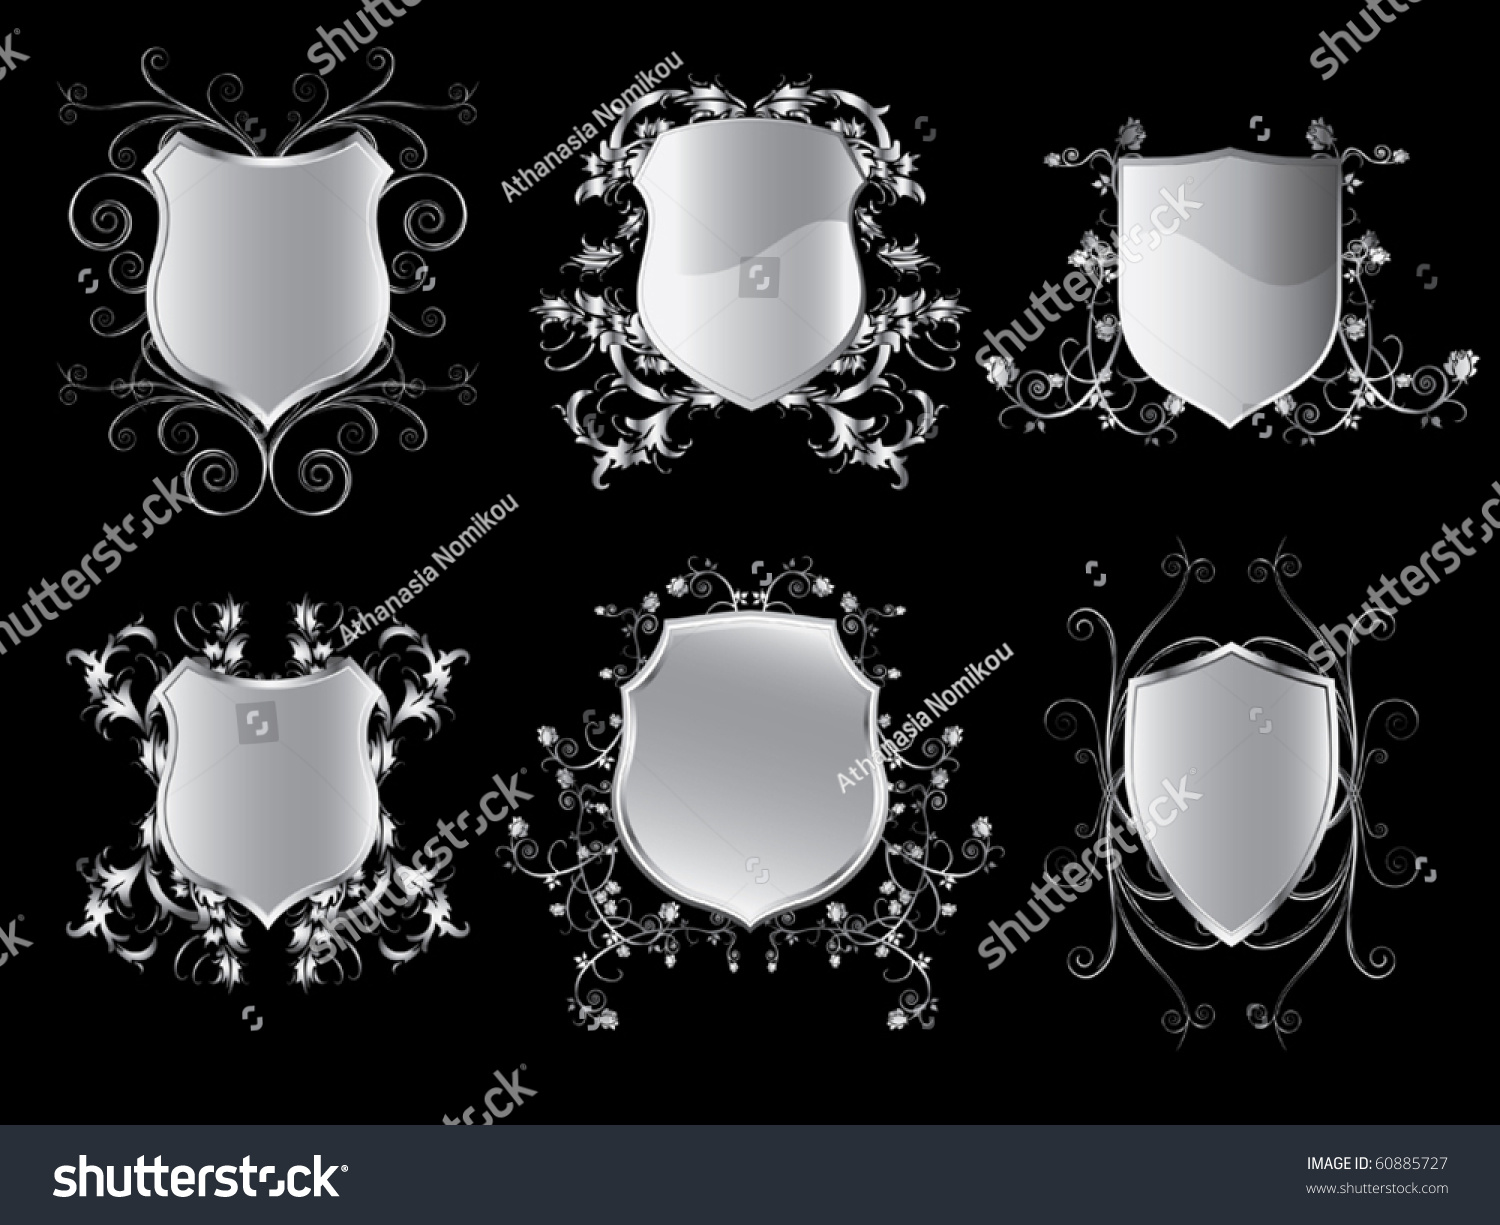 Emblem Shields Collection Vector Stock Vector 60885727 - Shutterstock